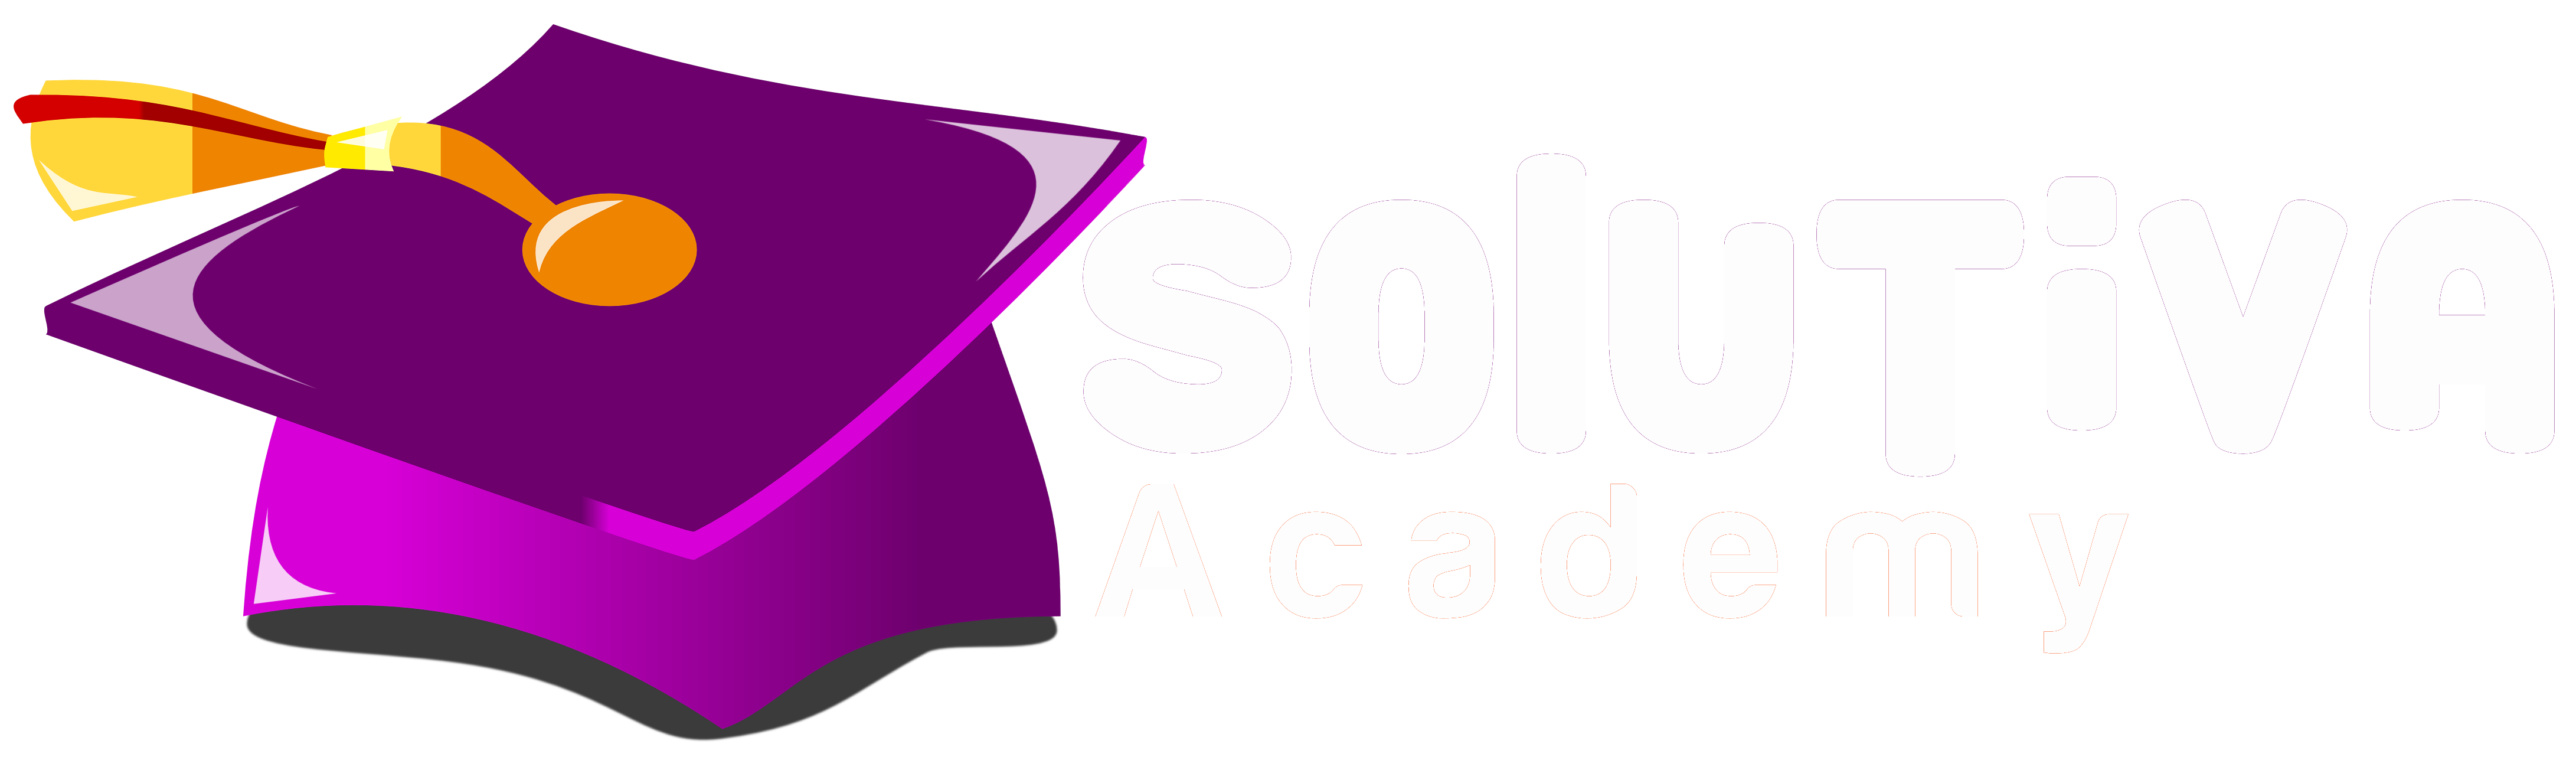 Solutiva Academy